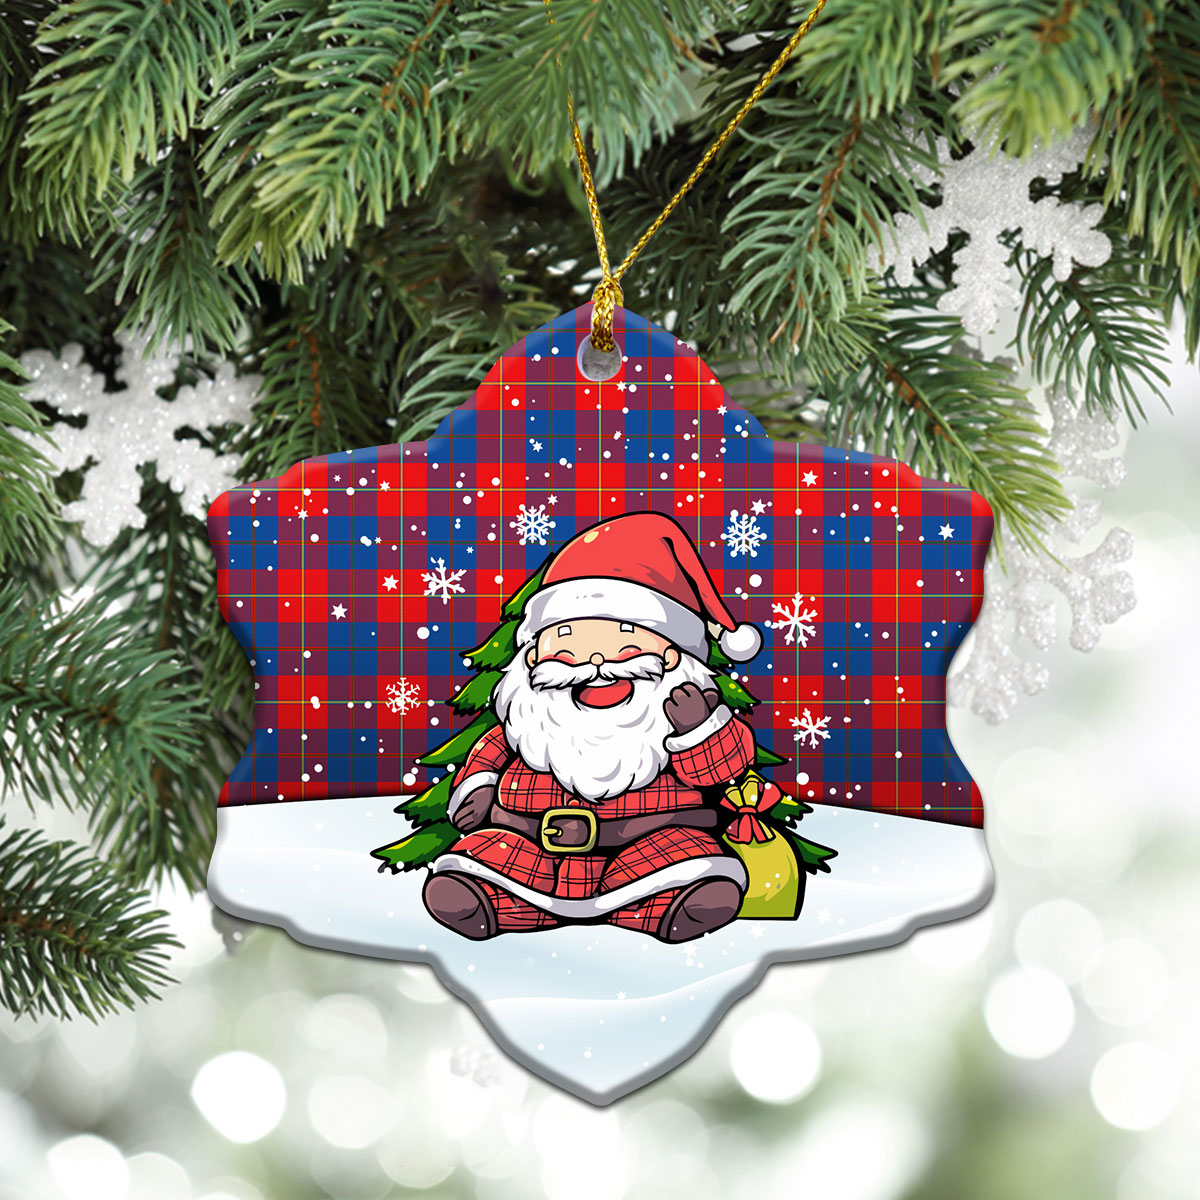 Galloway Red Tartan Christmas Ceramic Ornament - Scottish Santa Style